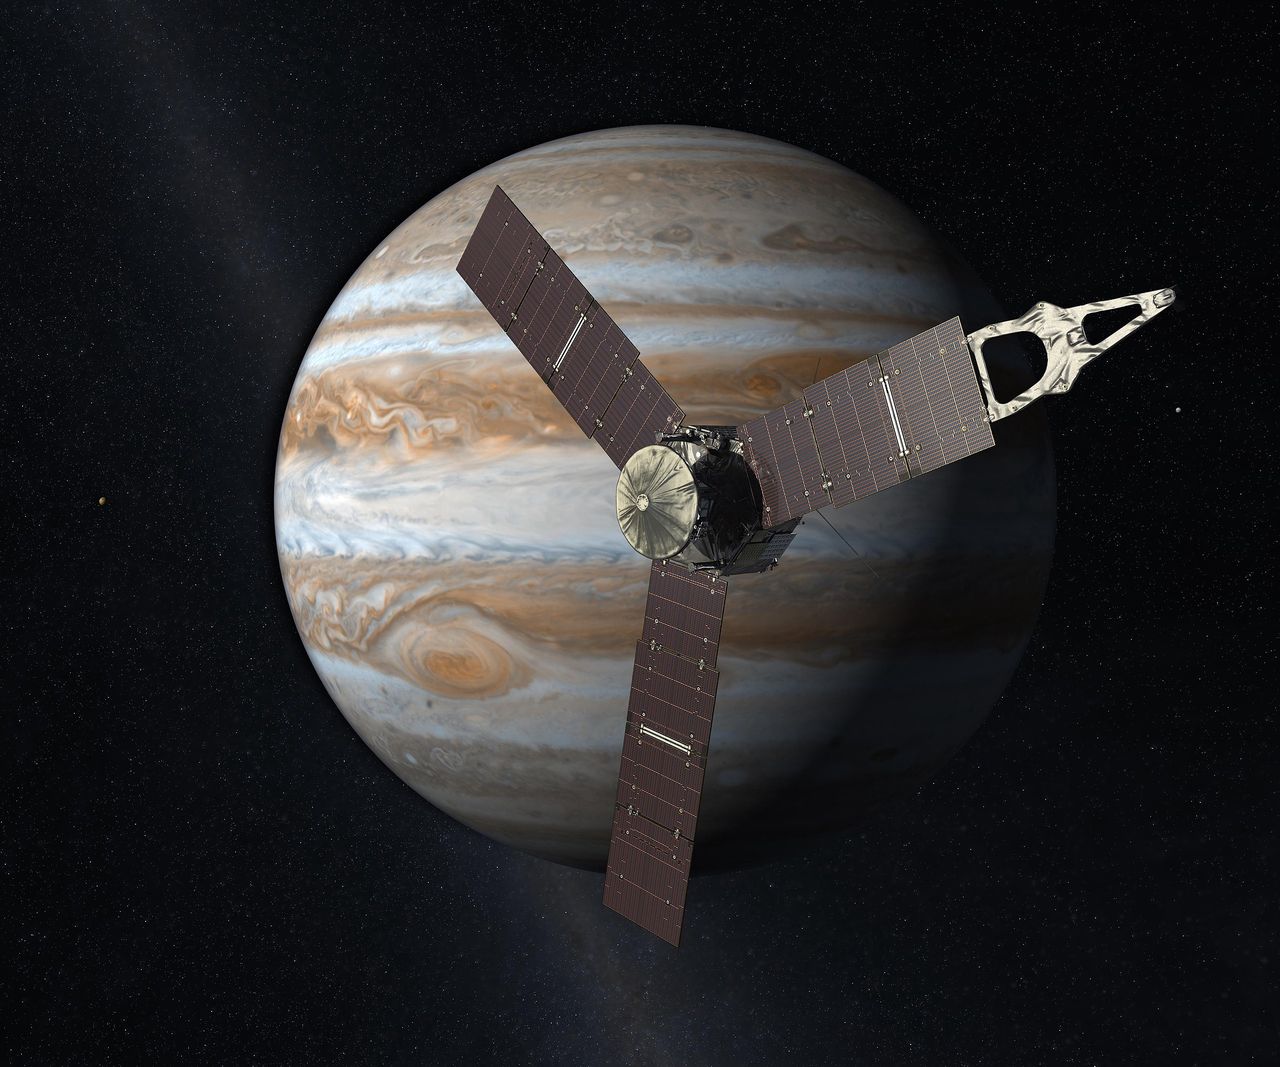 The Juno probe in orbit around Jupiter